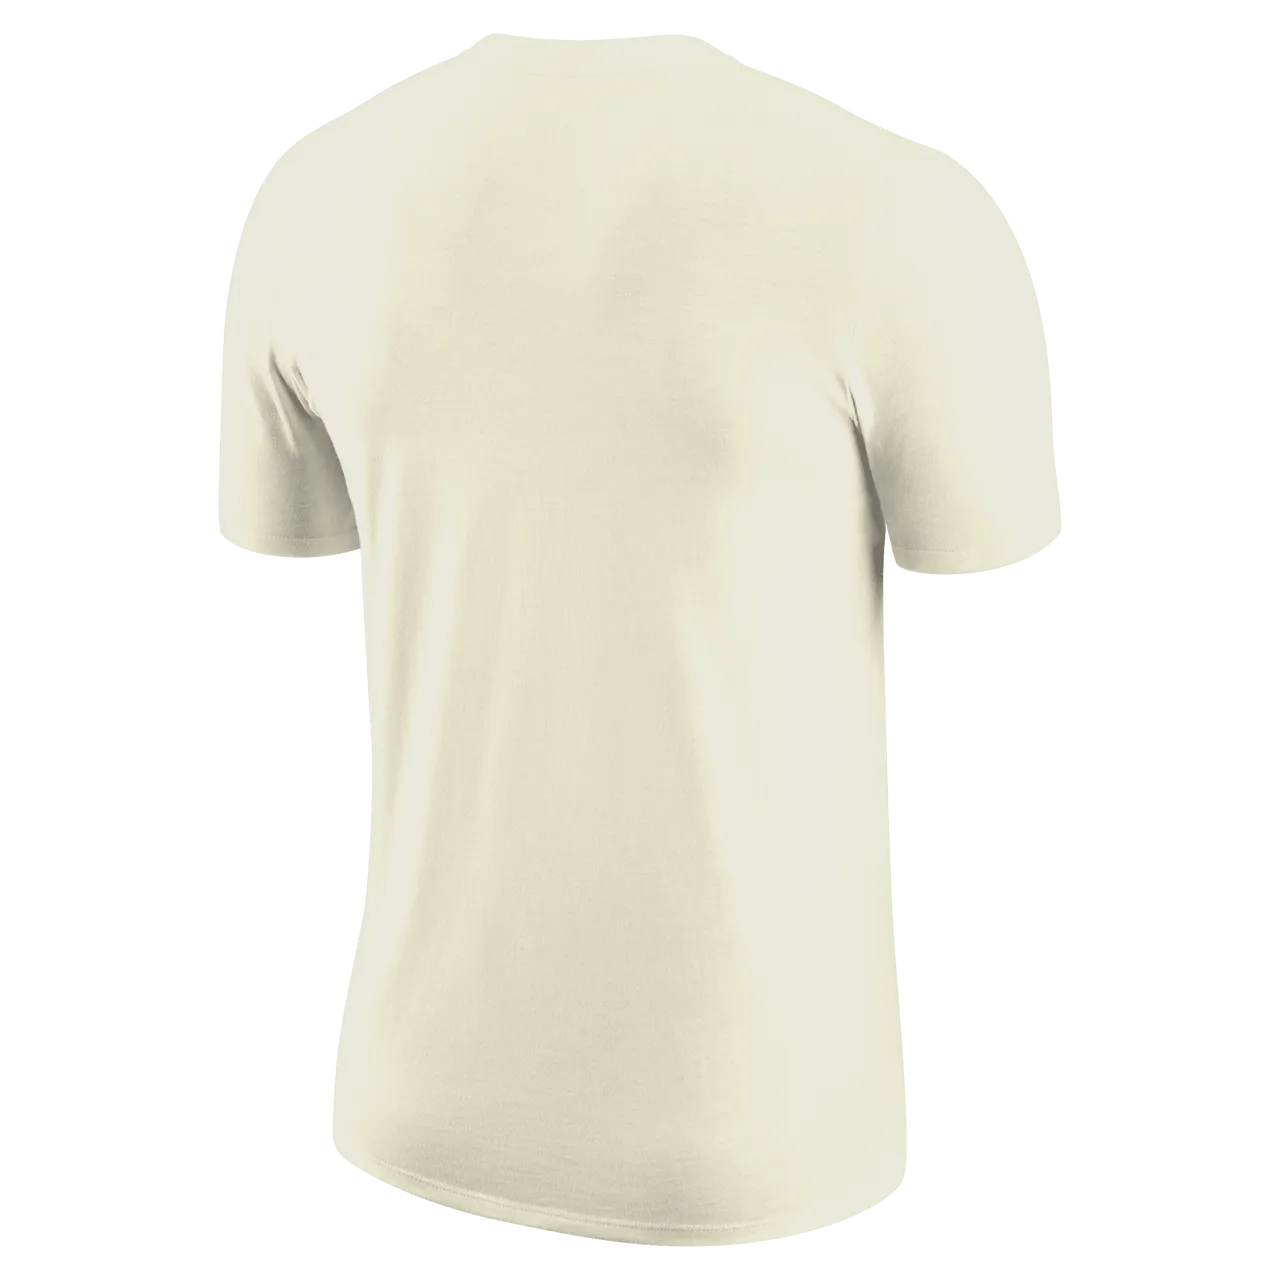 Chicago Bulls Essential Men's Nike NBA T-Shirt - White - Cotton